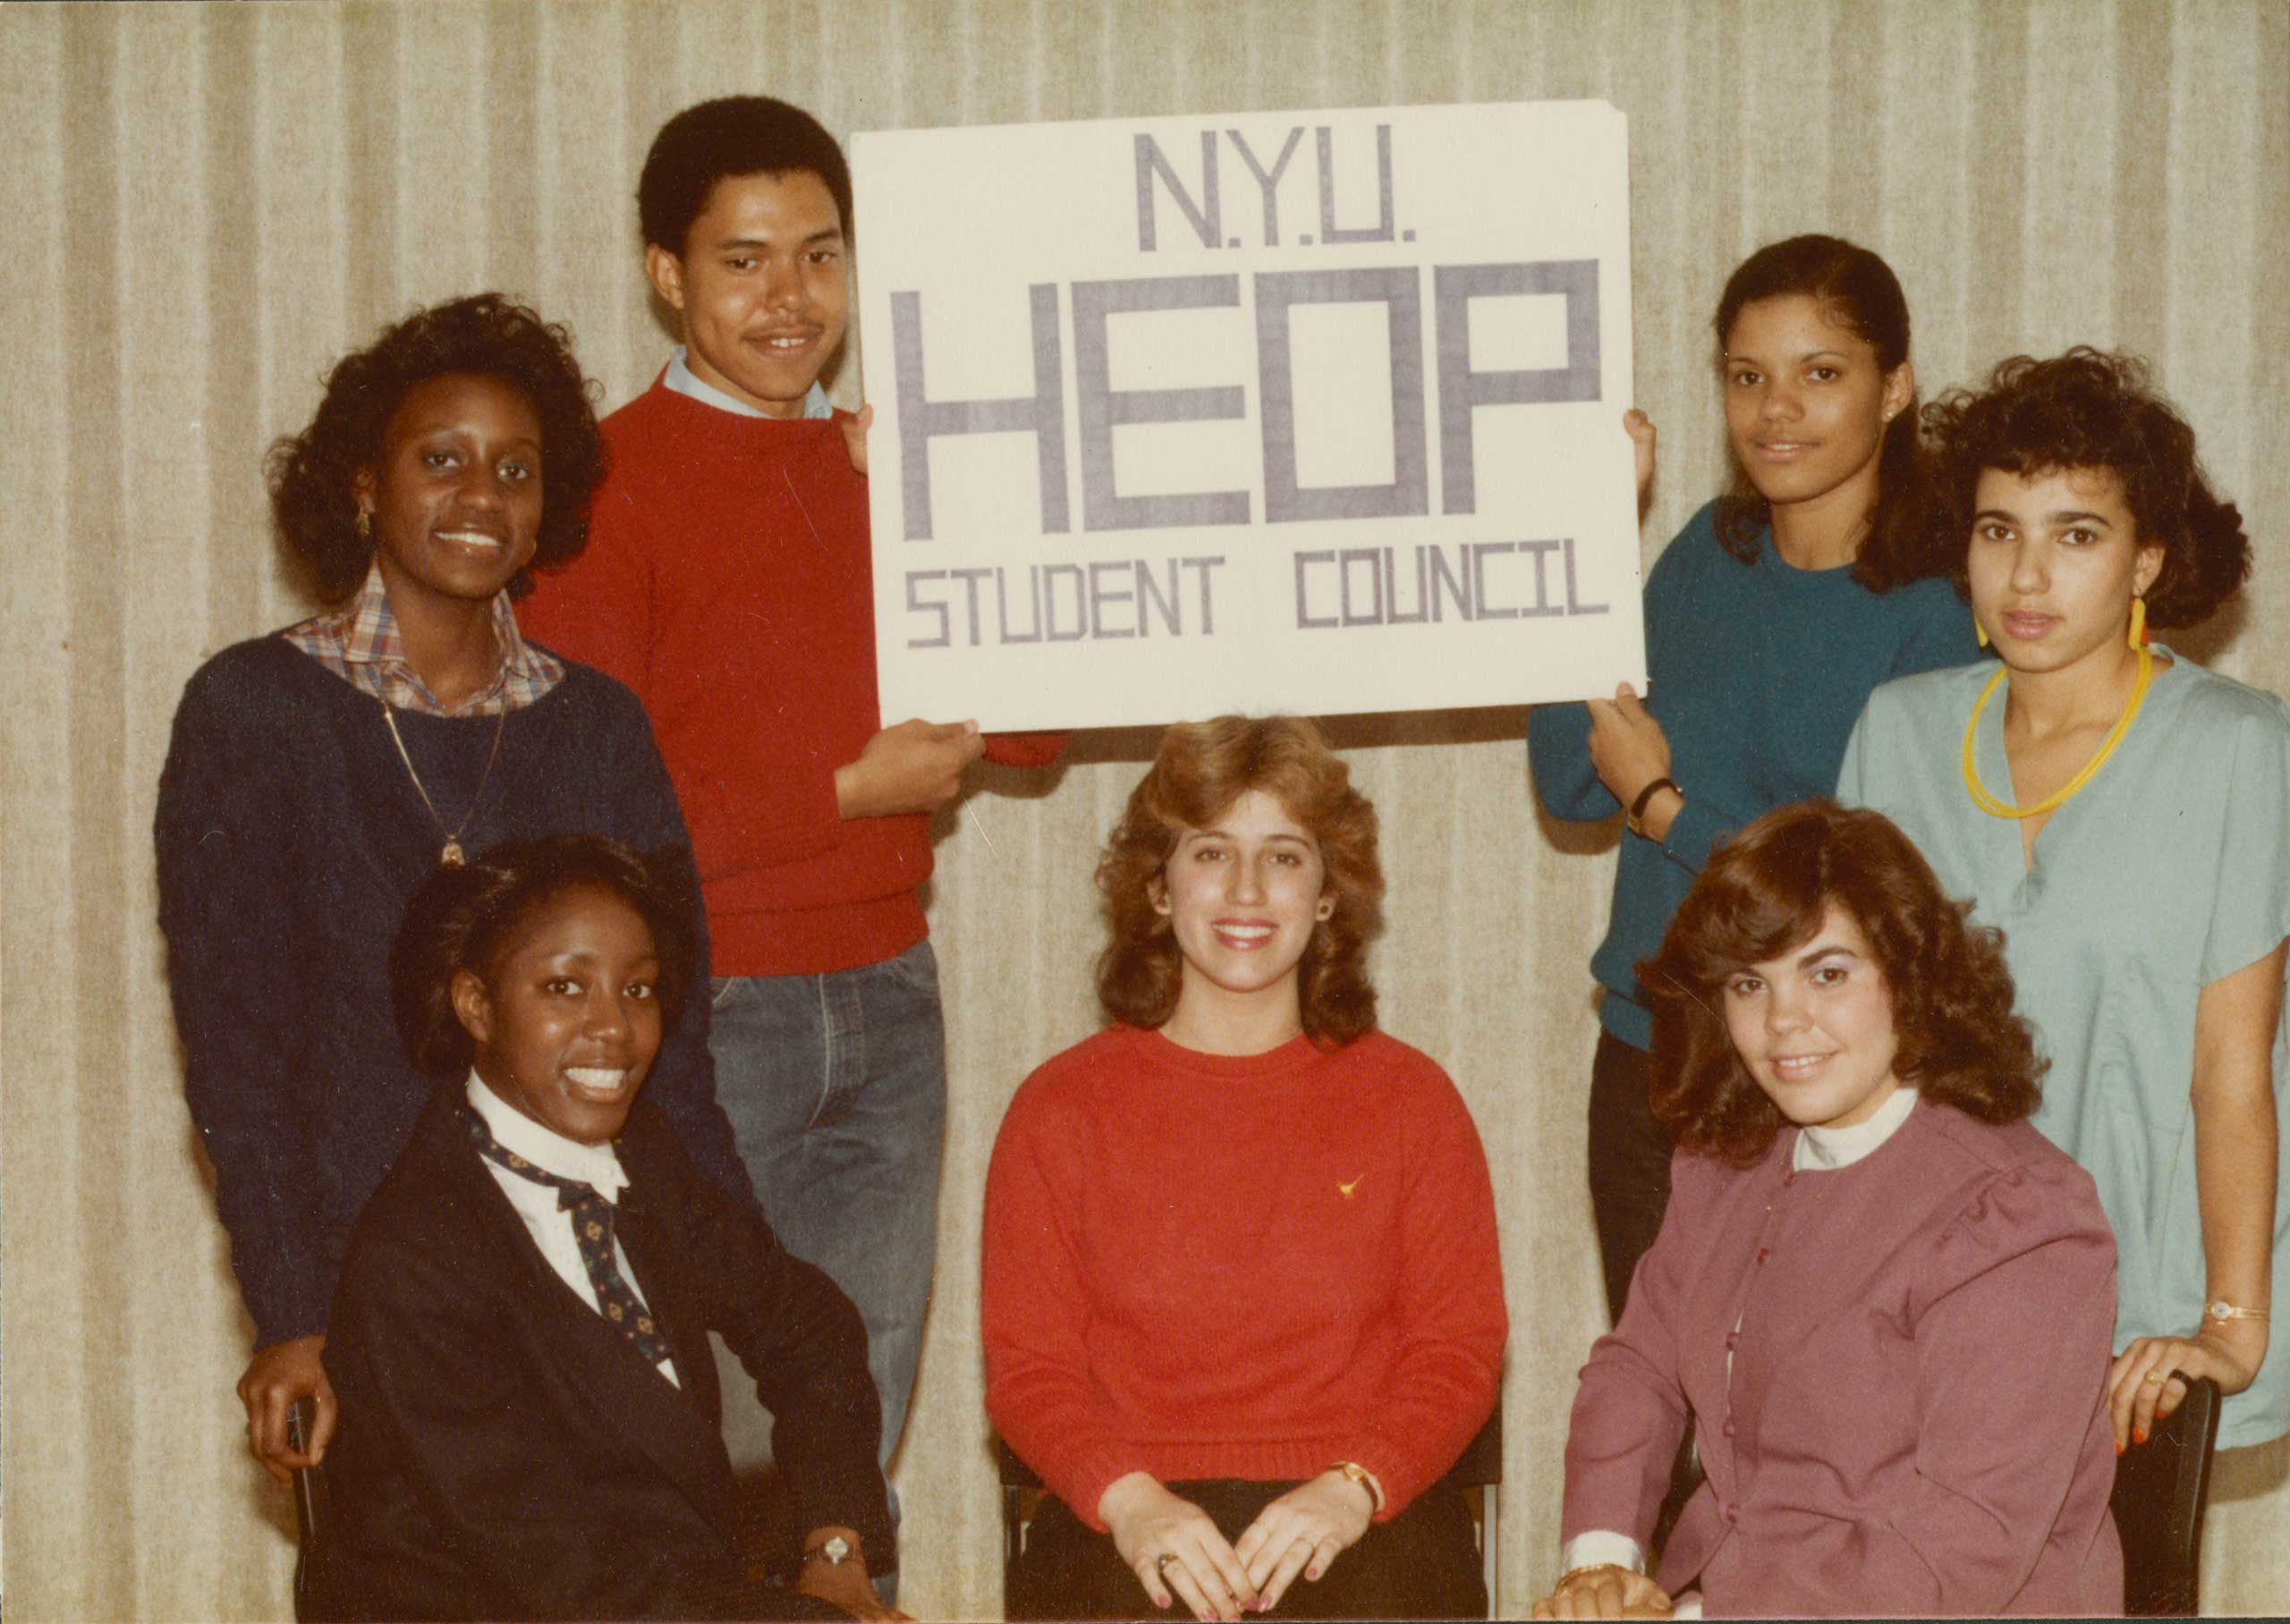 NYU HEOP student council photo.